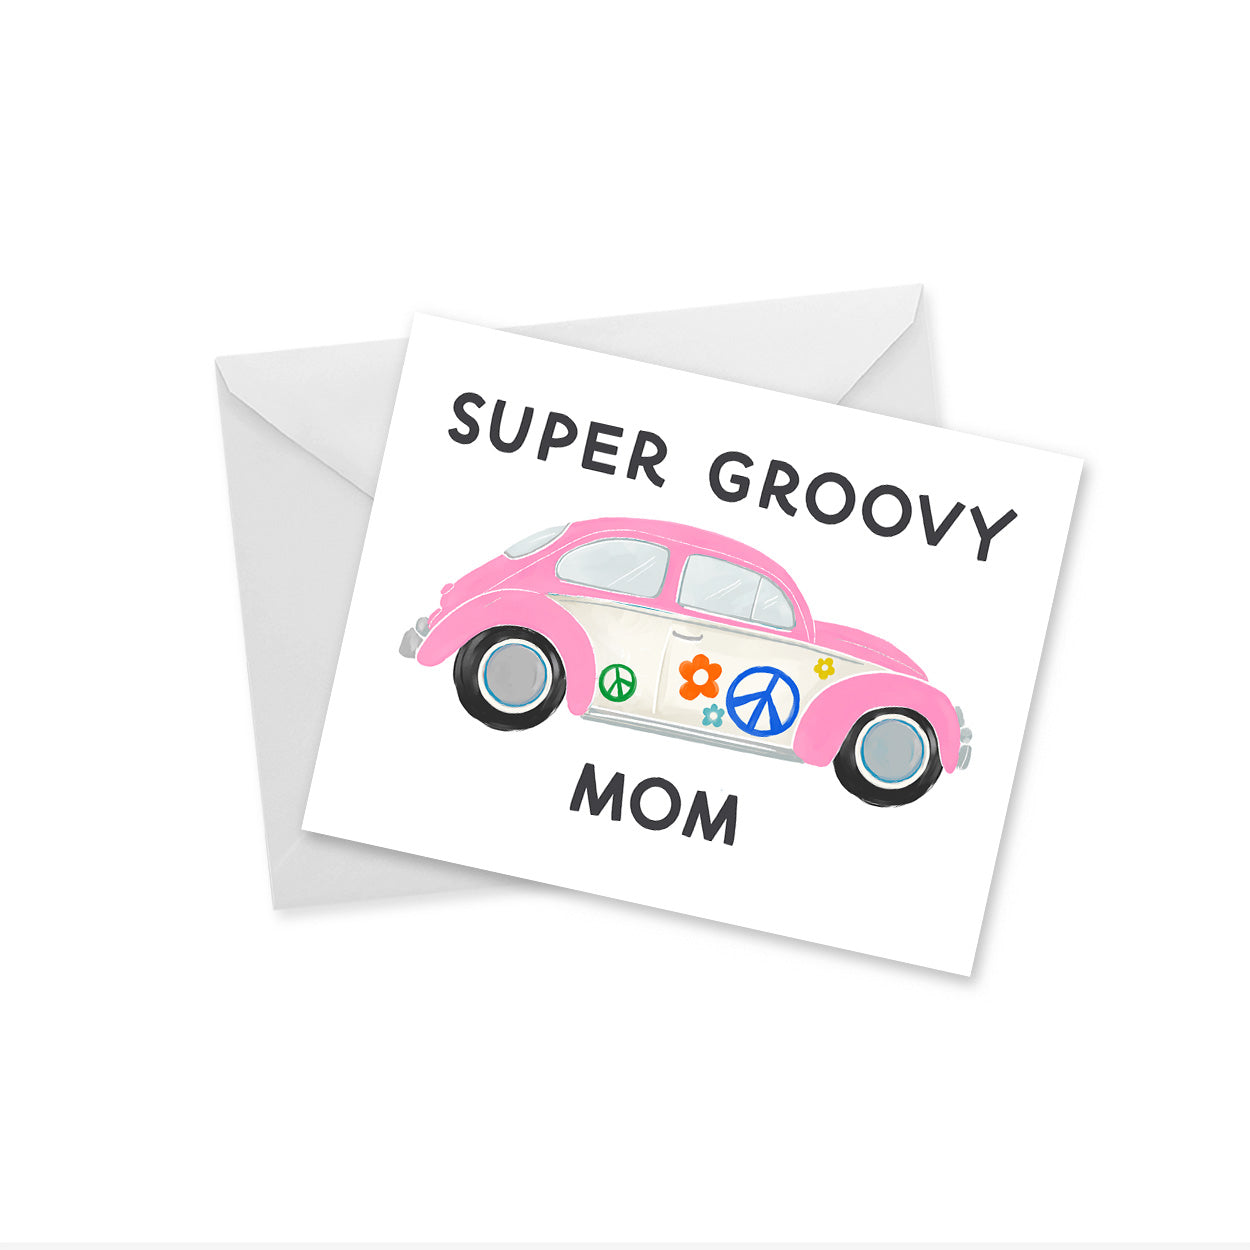 Super Groovy Mom - Notecard